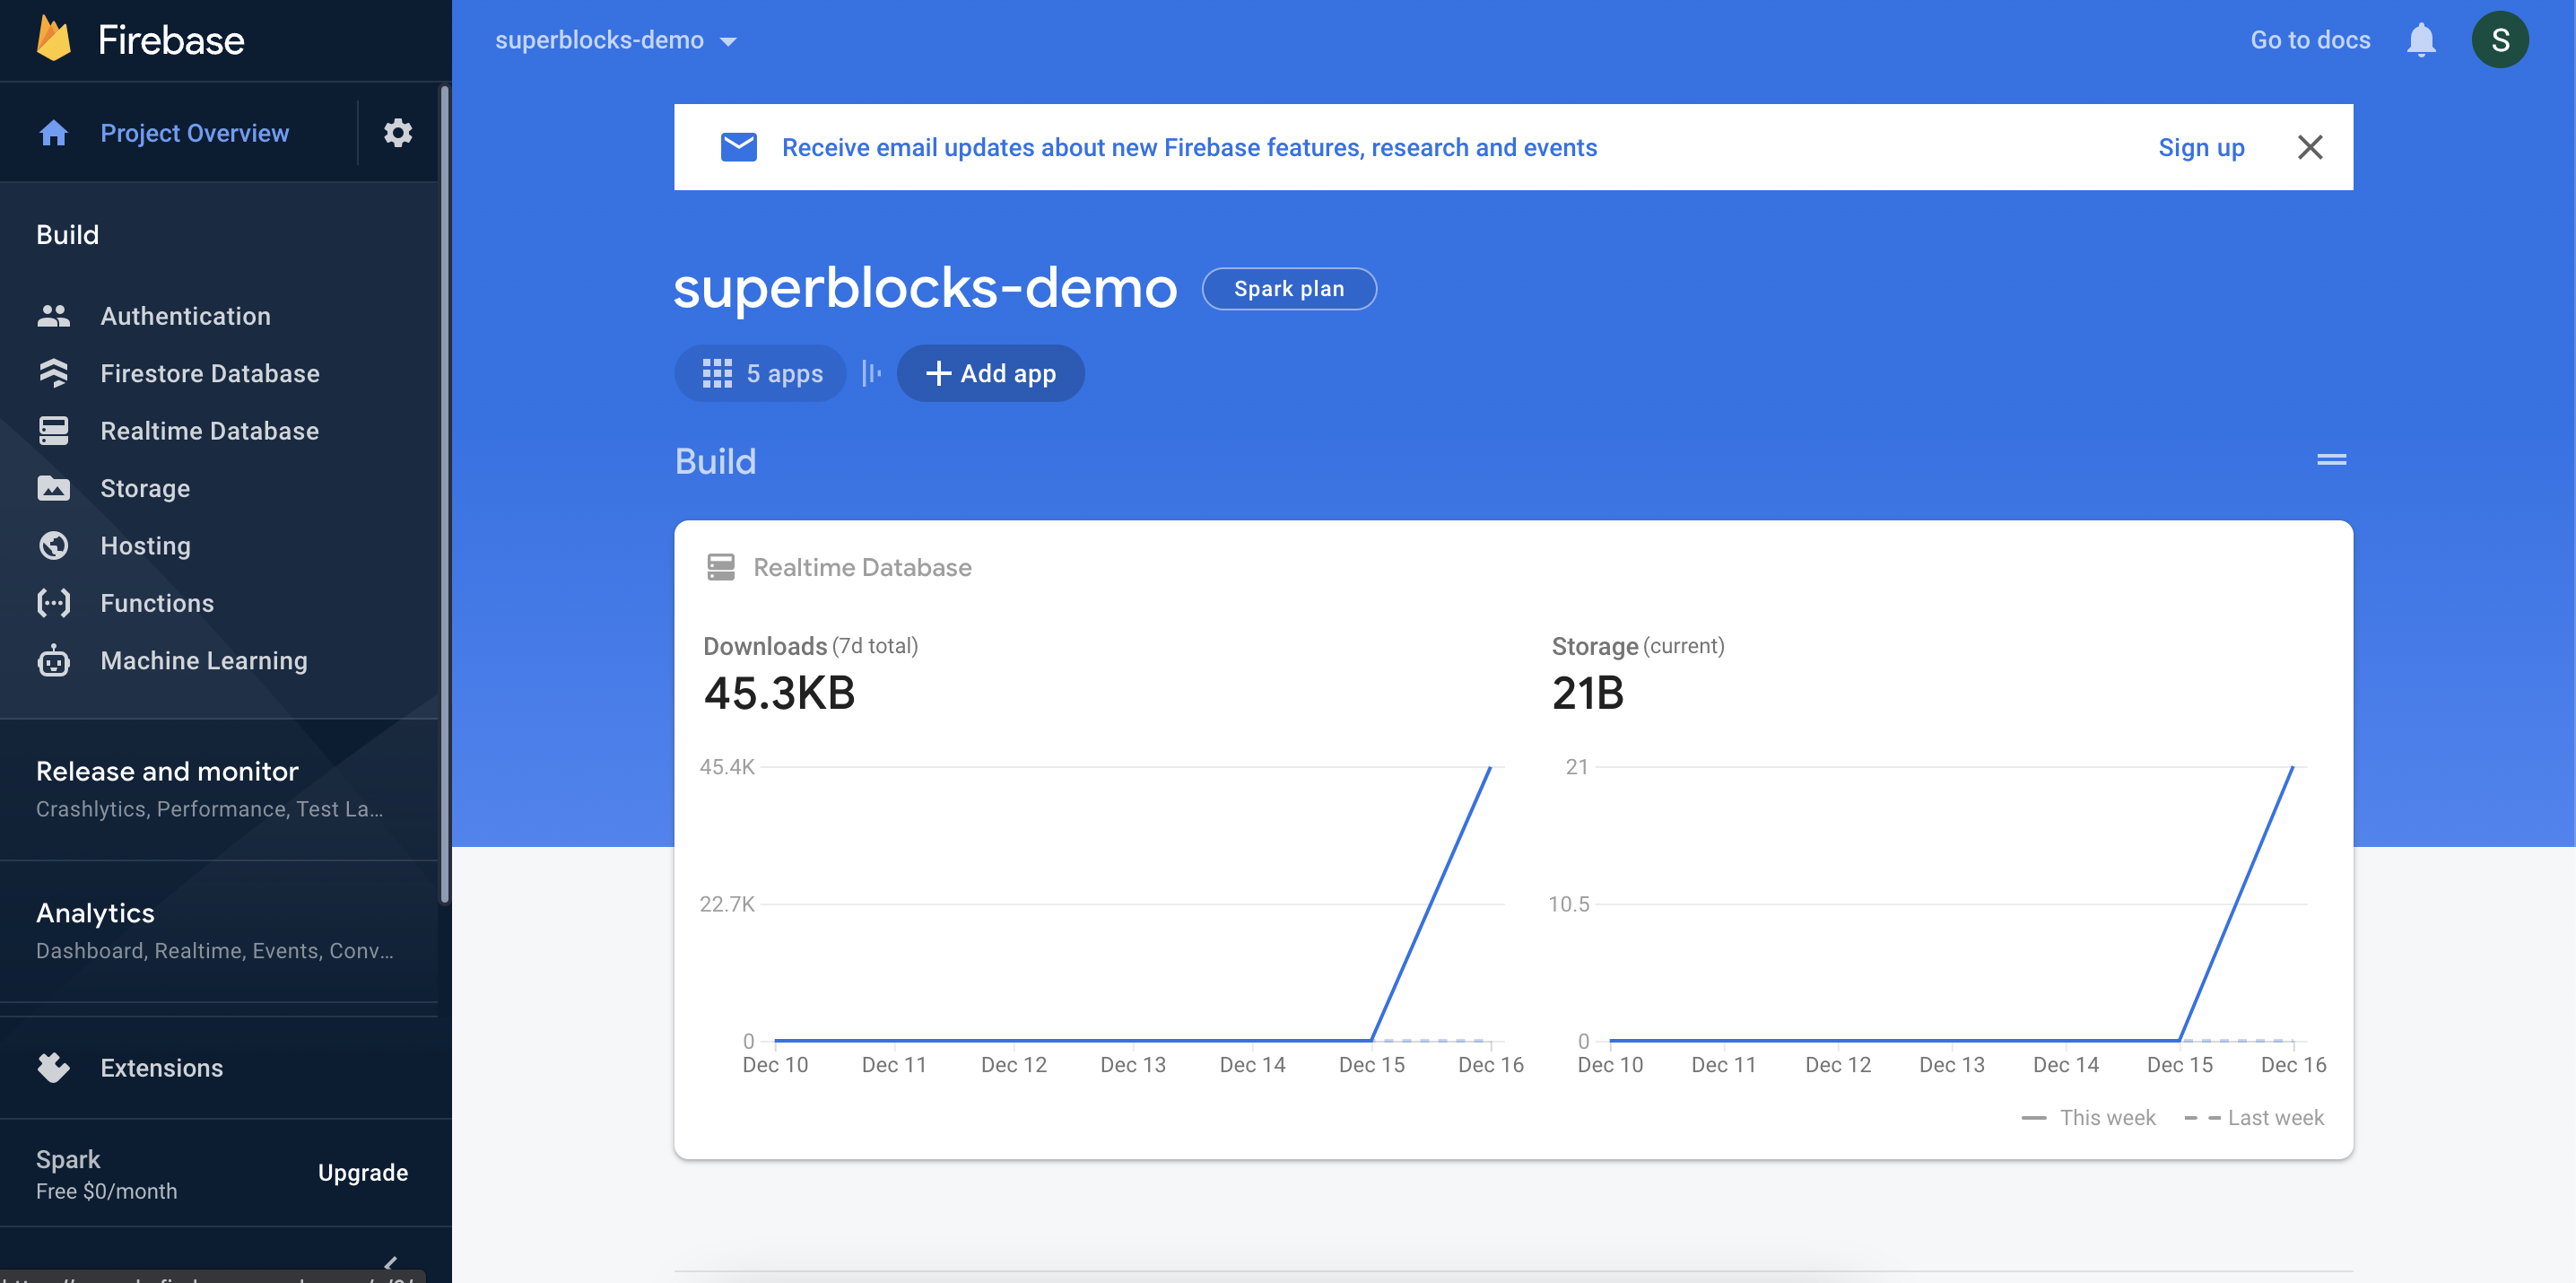 Create a new Firebase web application named superblocks-demo